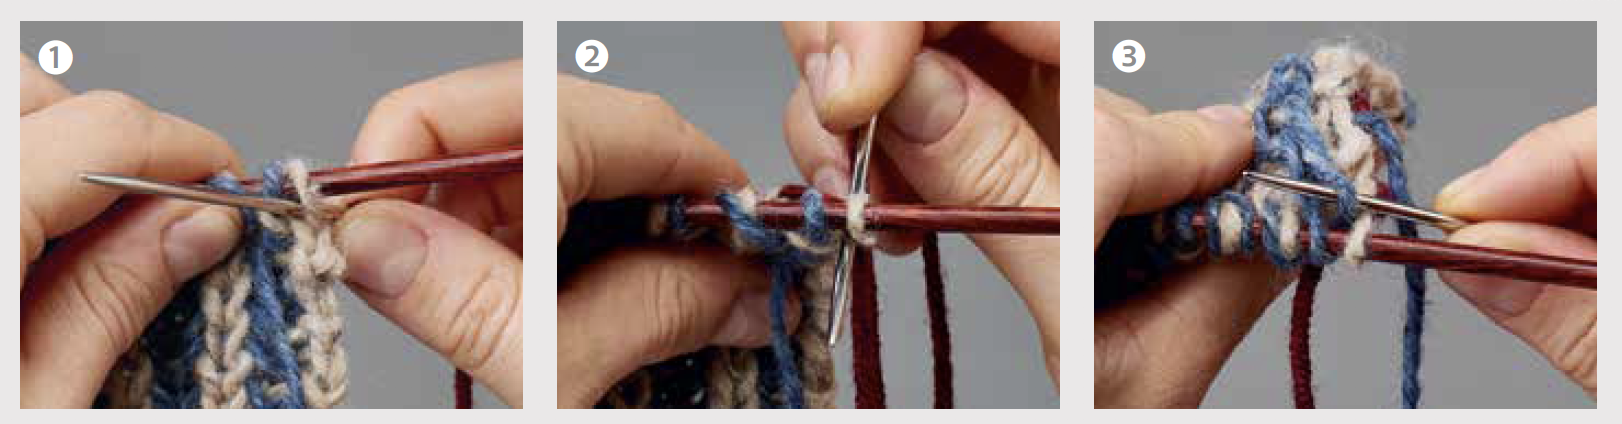 How to cast off brioche stitch steps 1-3